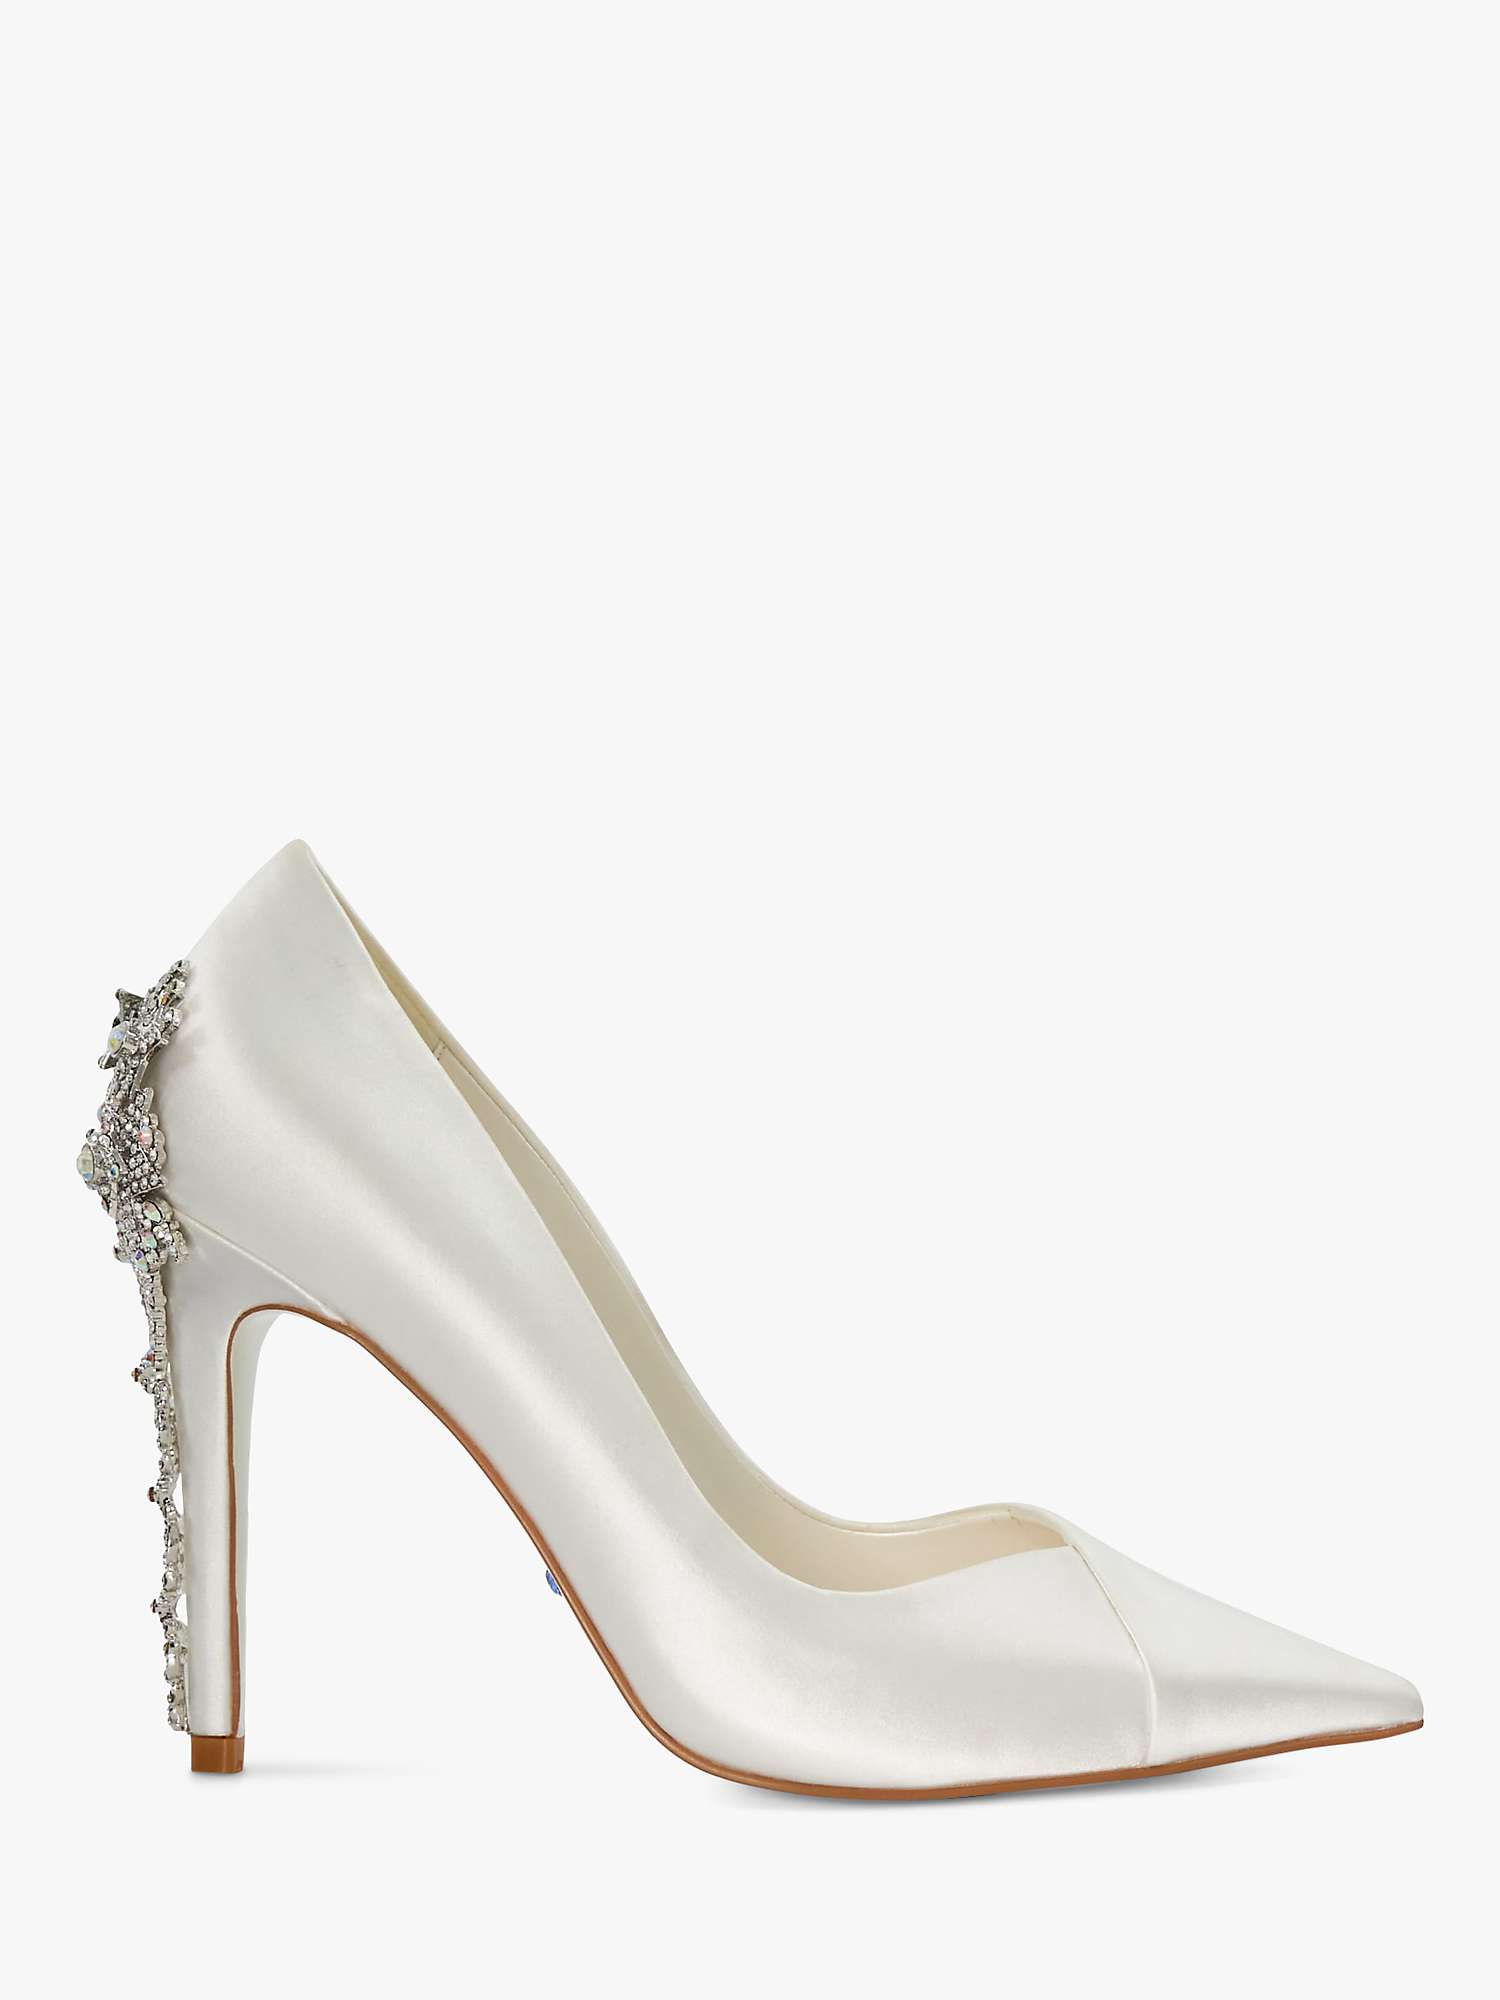 Buy Dune Bridal Collection Auras Embellished High Heel Court Shoes, White Online at johnlewis.com